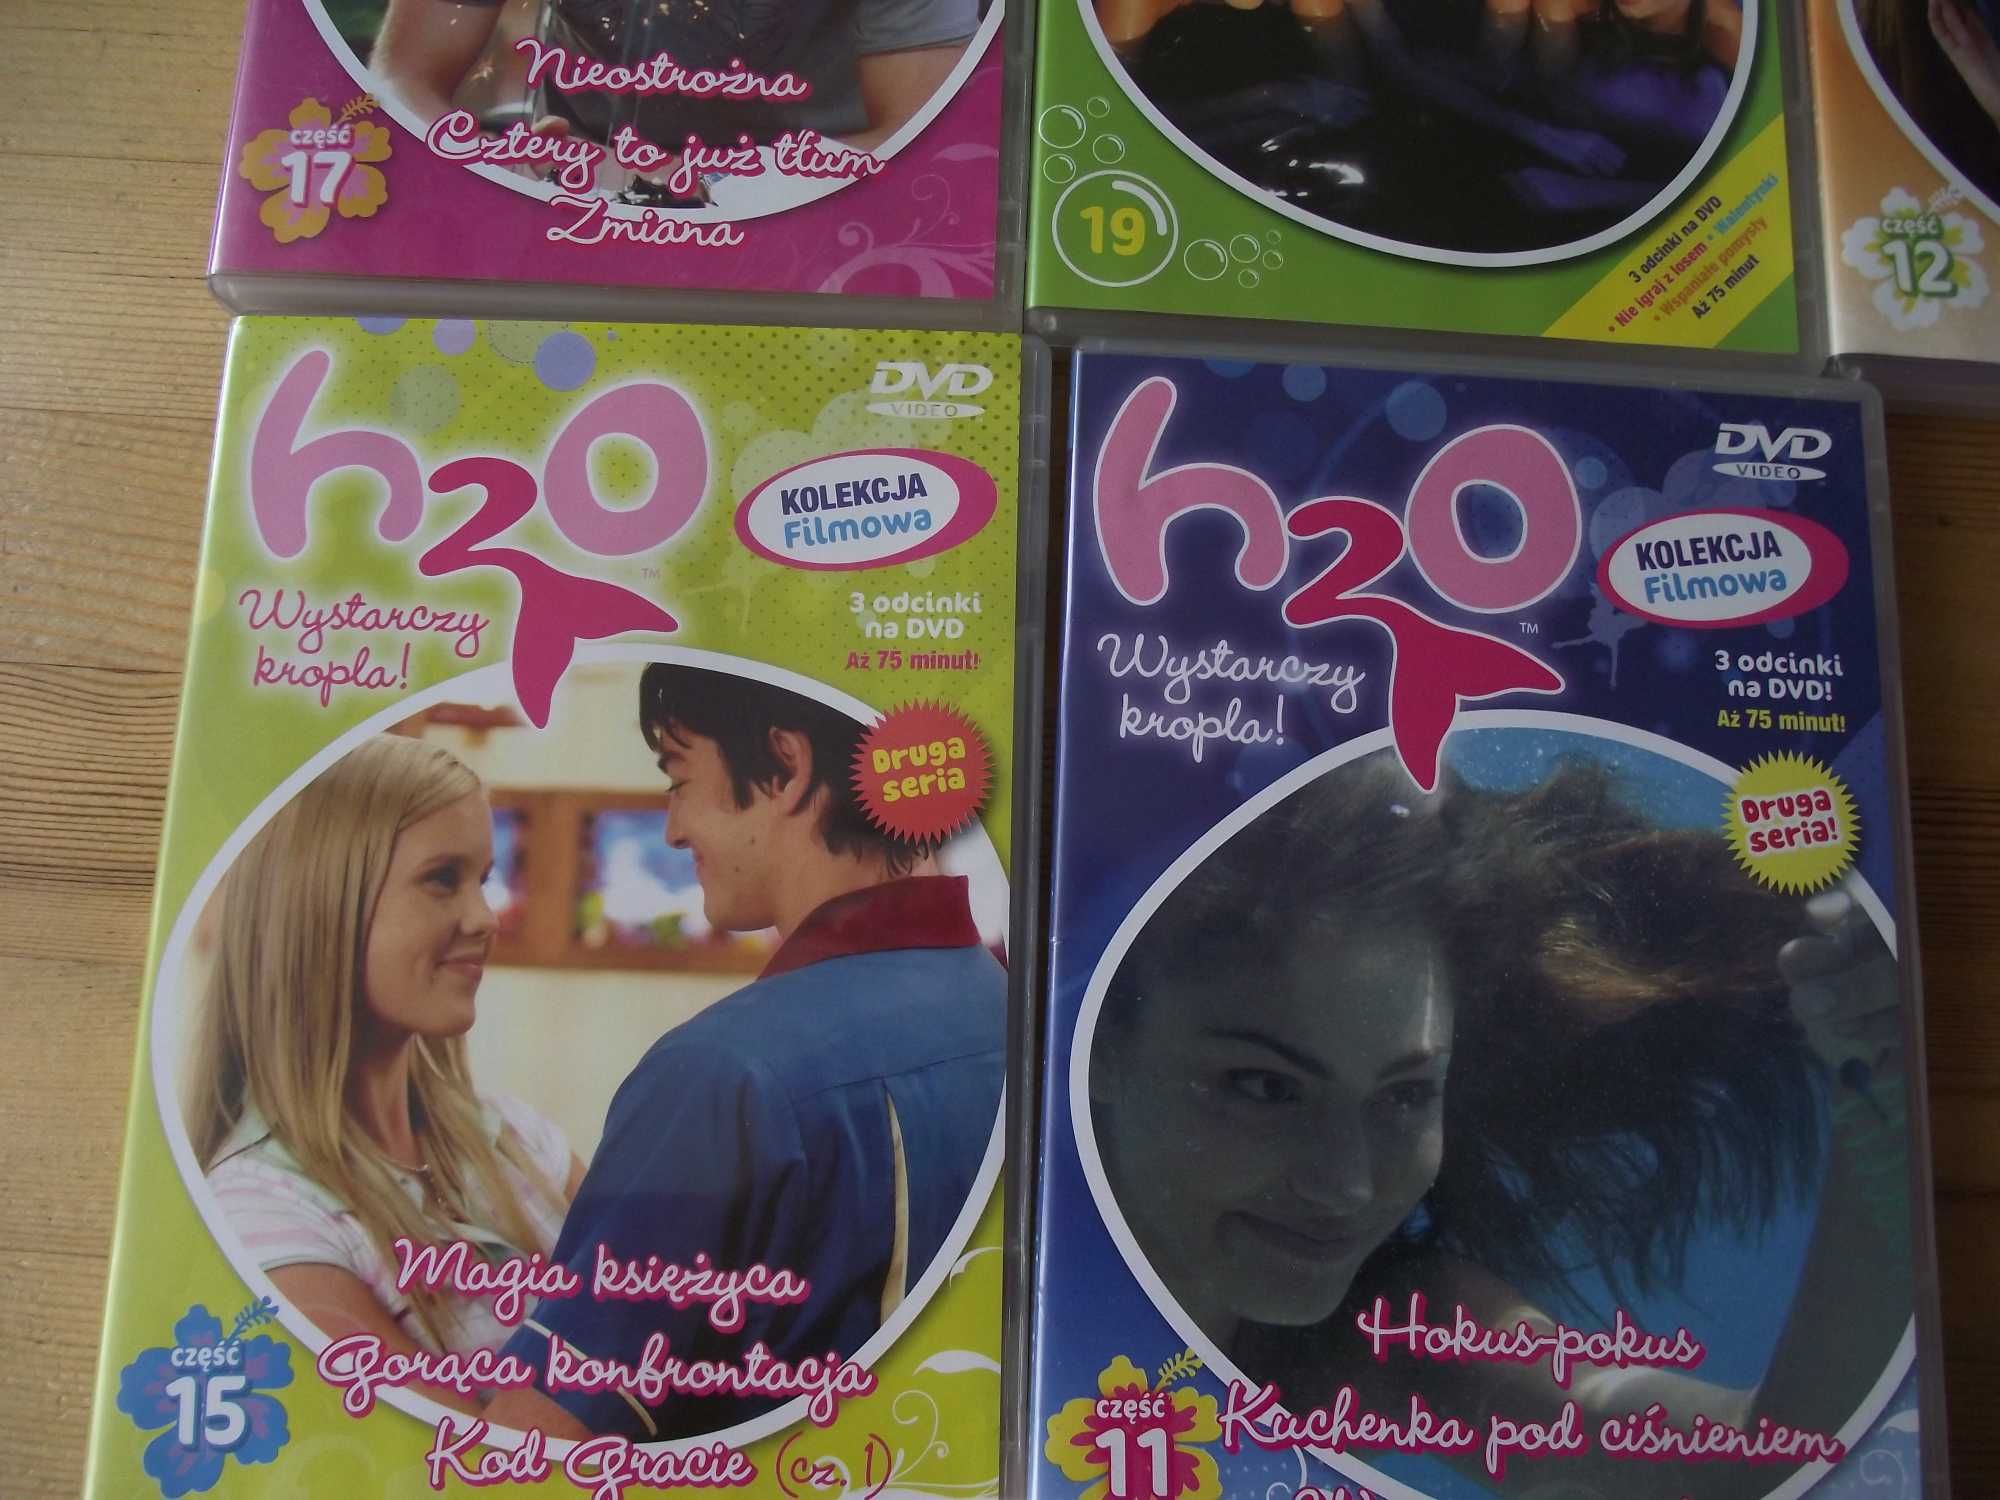 H2O kolekcja filmów dvd bajki